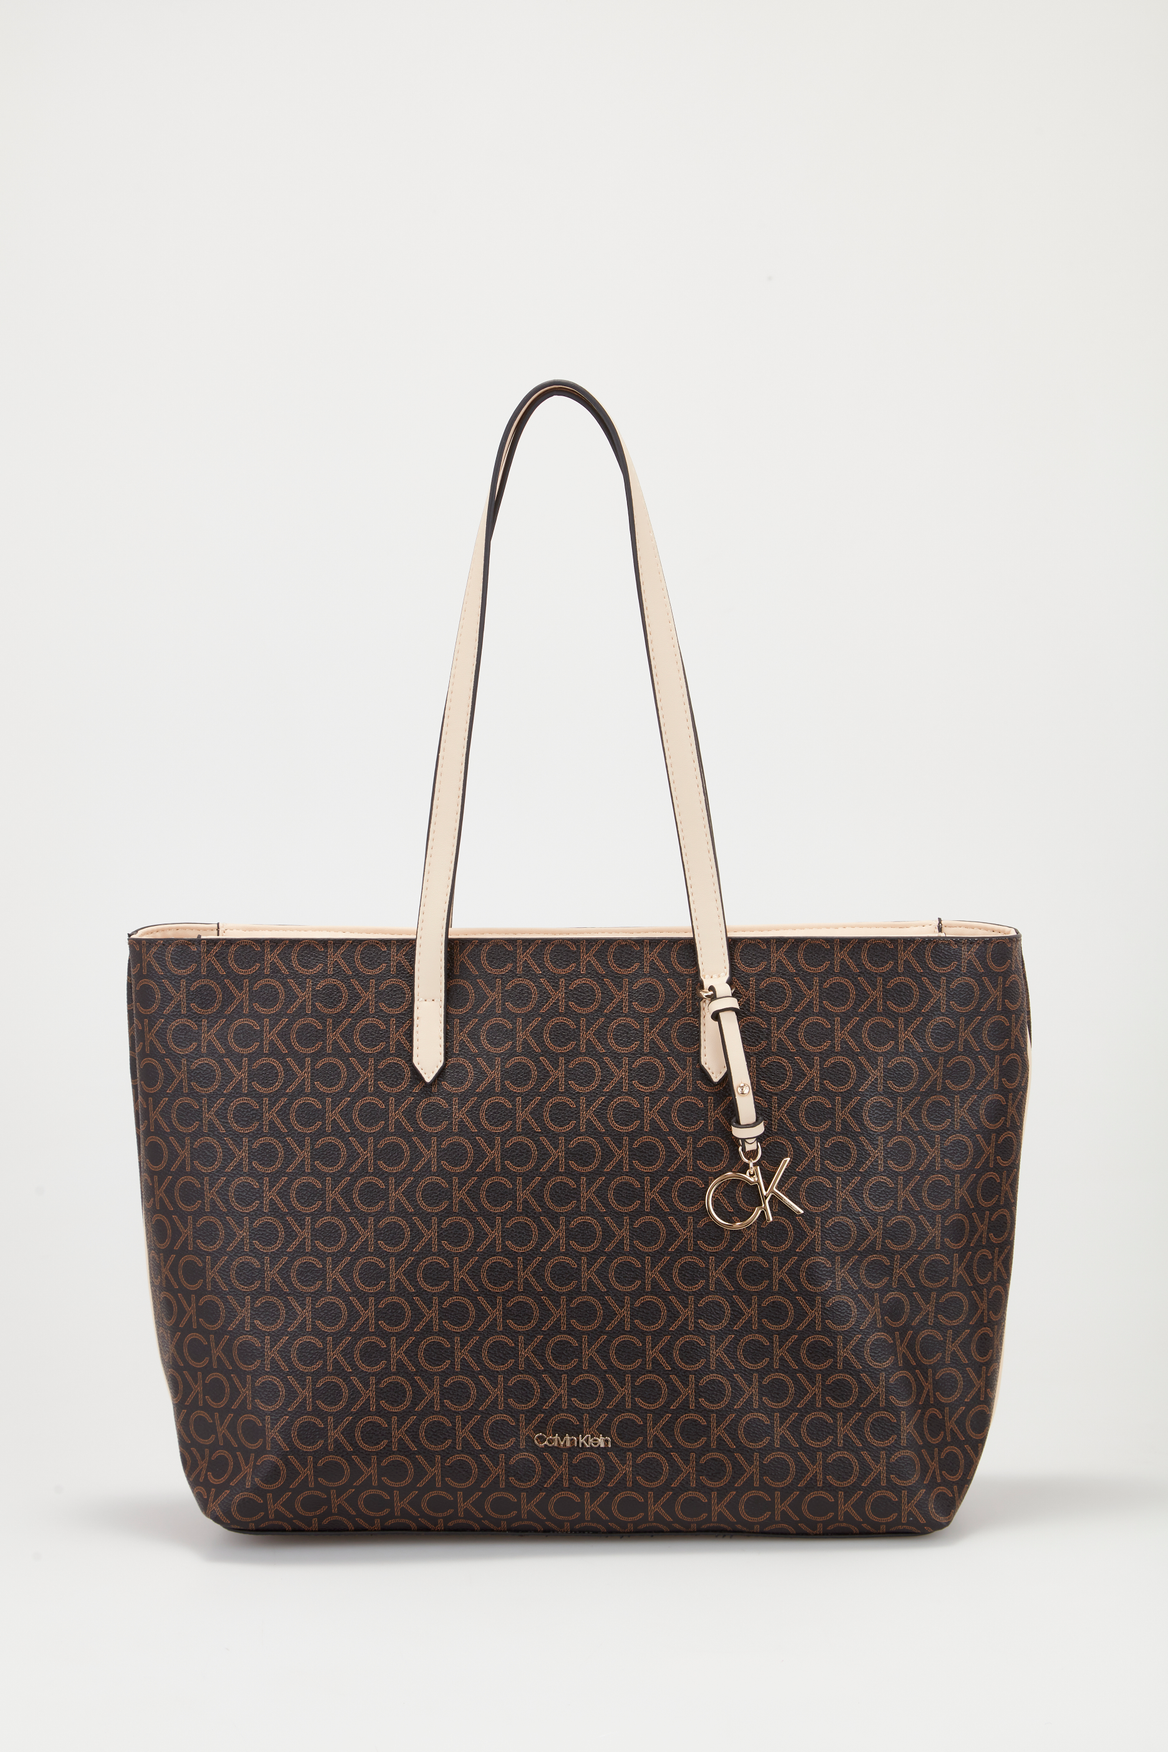 Calvin Klein Reyna Novelty Triple Compartment Shoulder Bag, Black/Silver  Combo,One Size: Handbags: Amazon.com